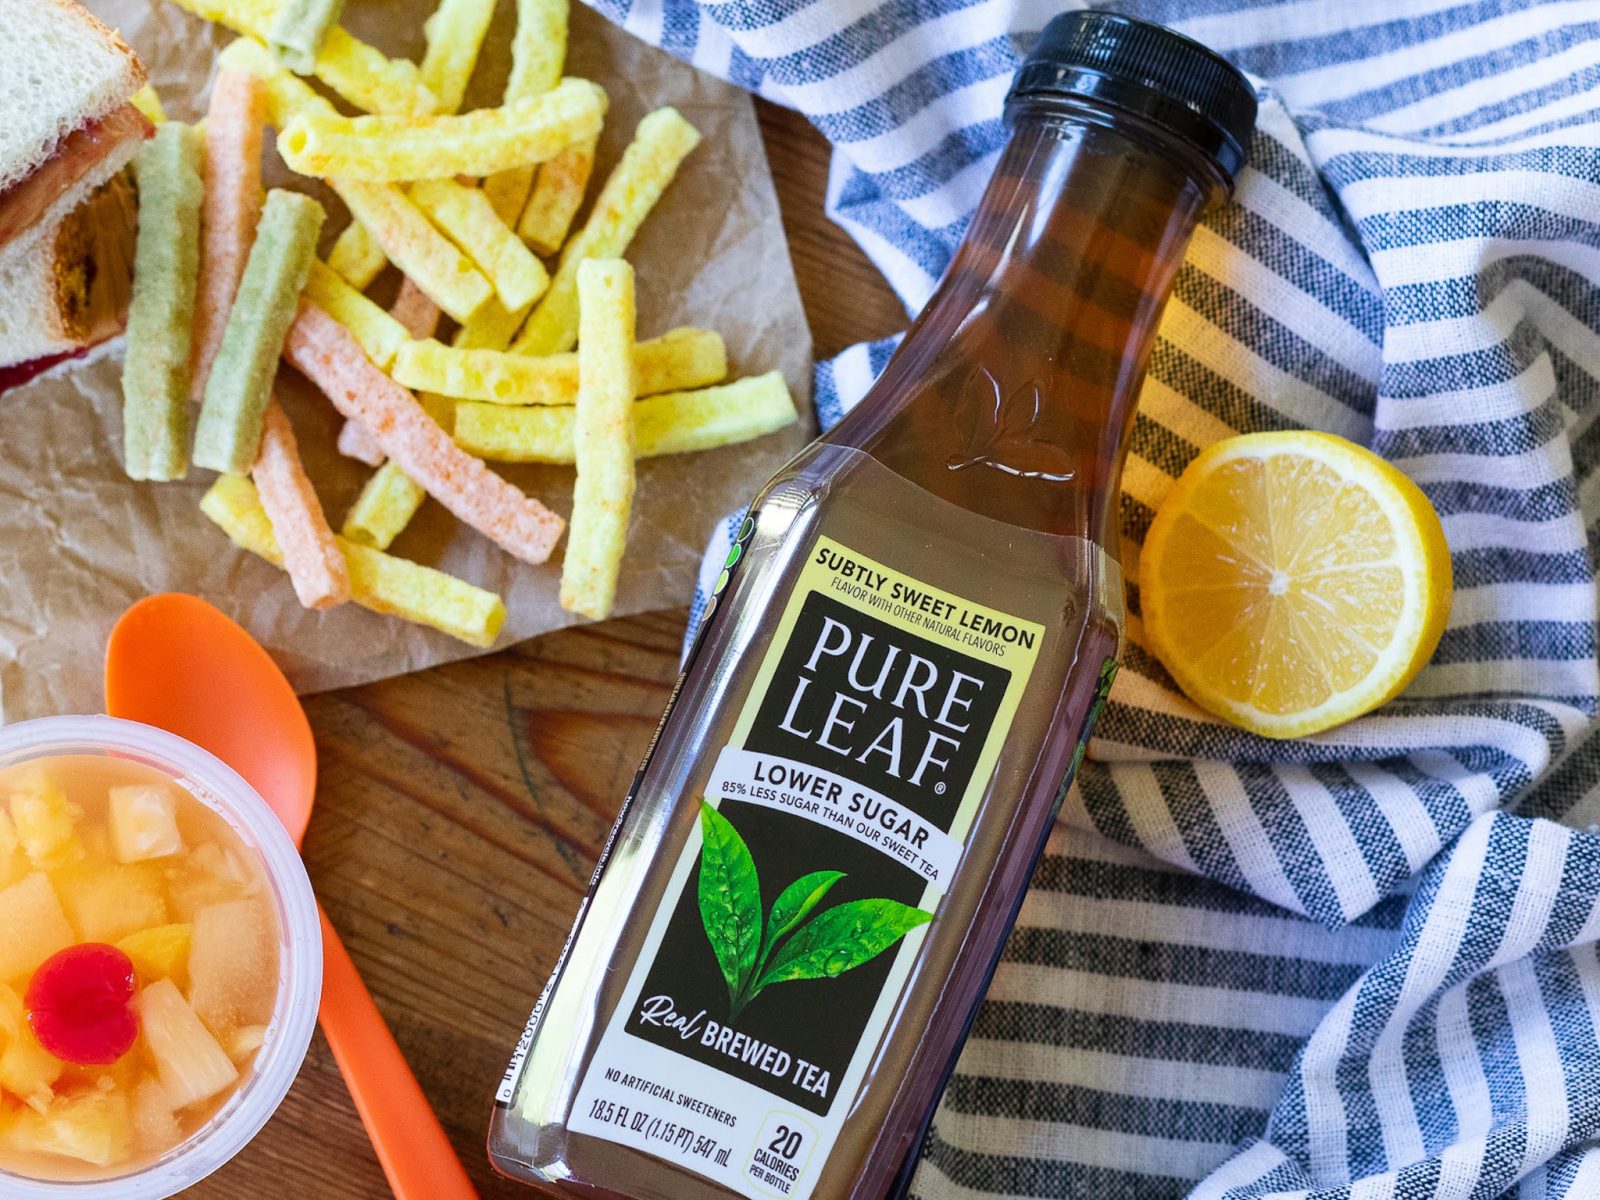 Get The 6-Packs Of Pure Leaf Tea For Just $5.99 At Kroger